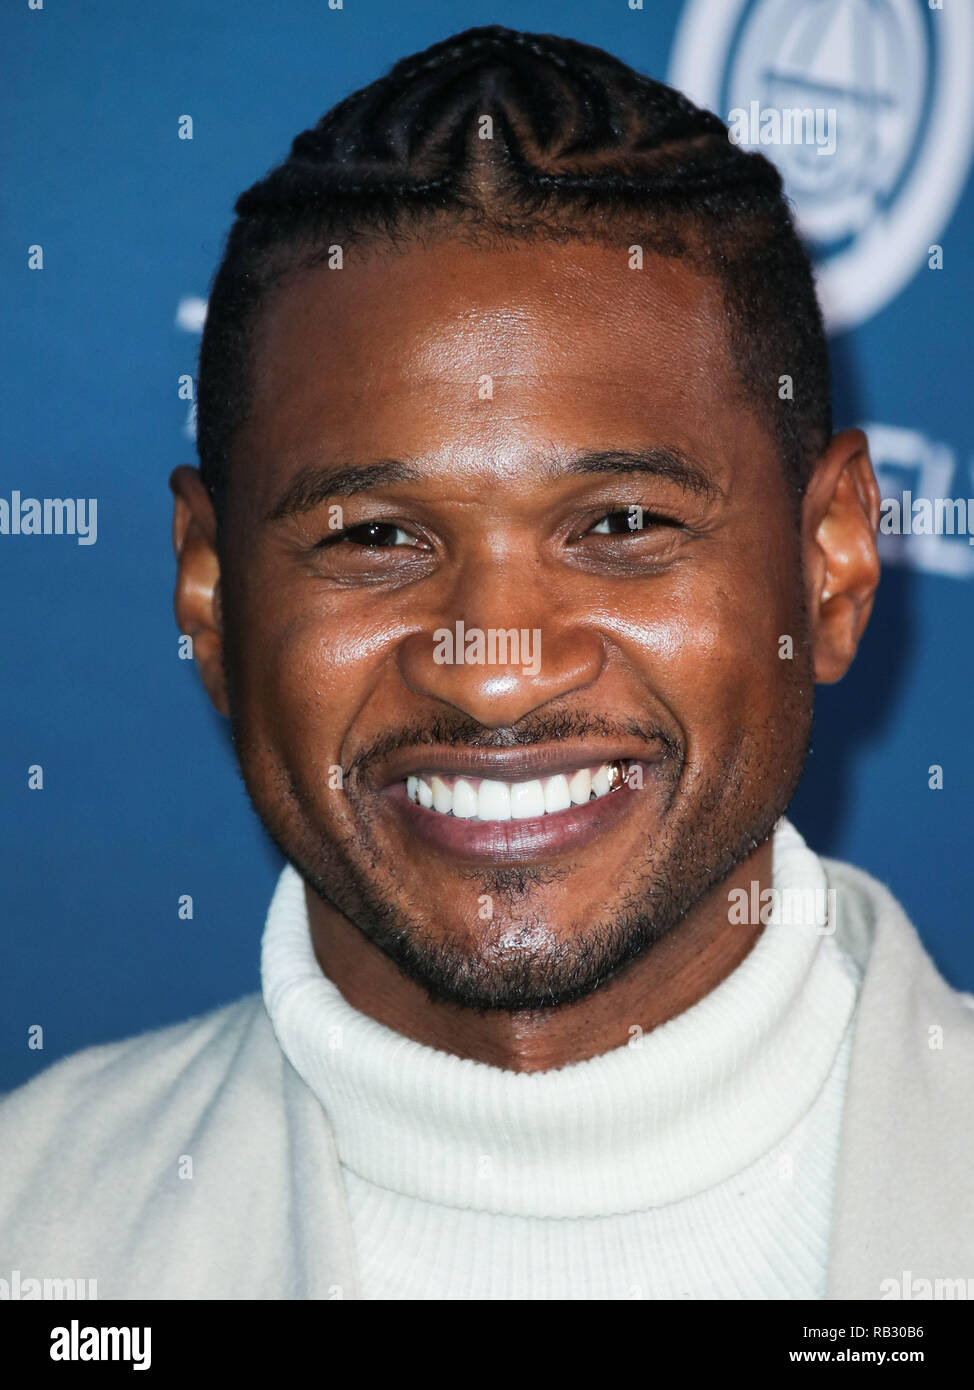 LOS ANGELES, USA - JANUARY 05: Singer Usher (Usher Raymond IV) arrives ...